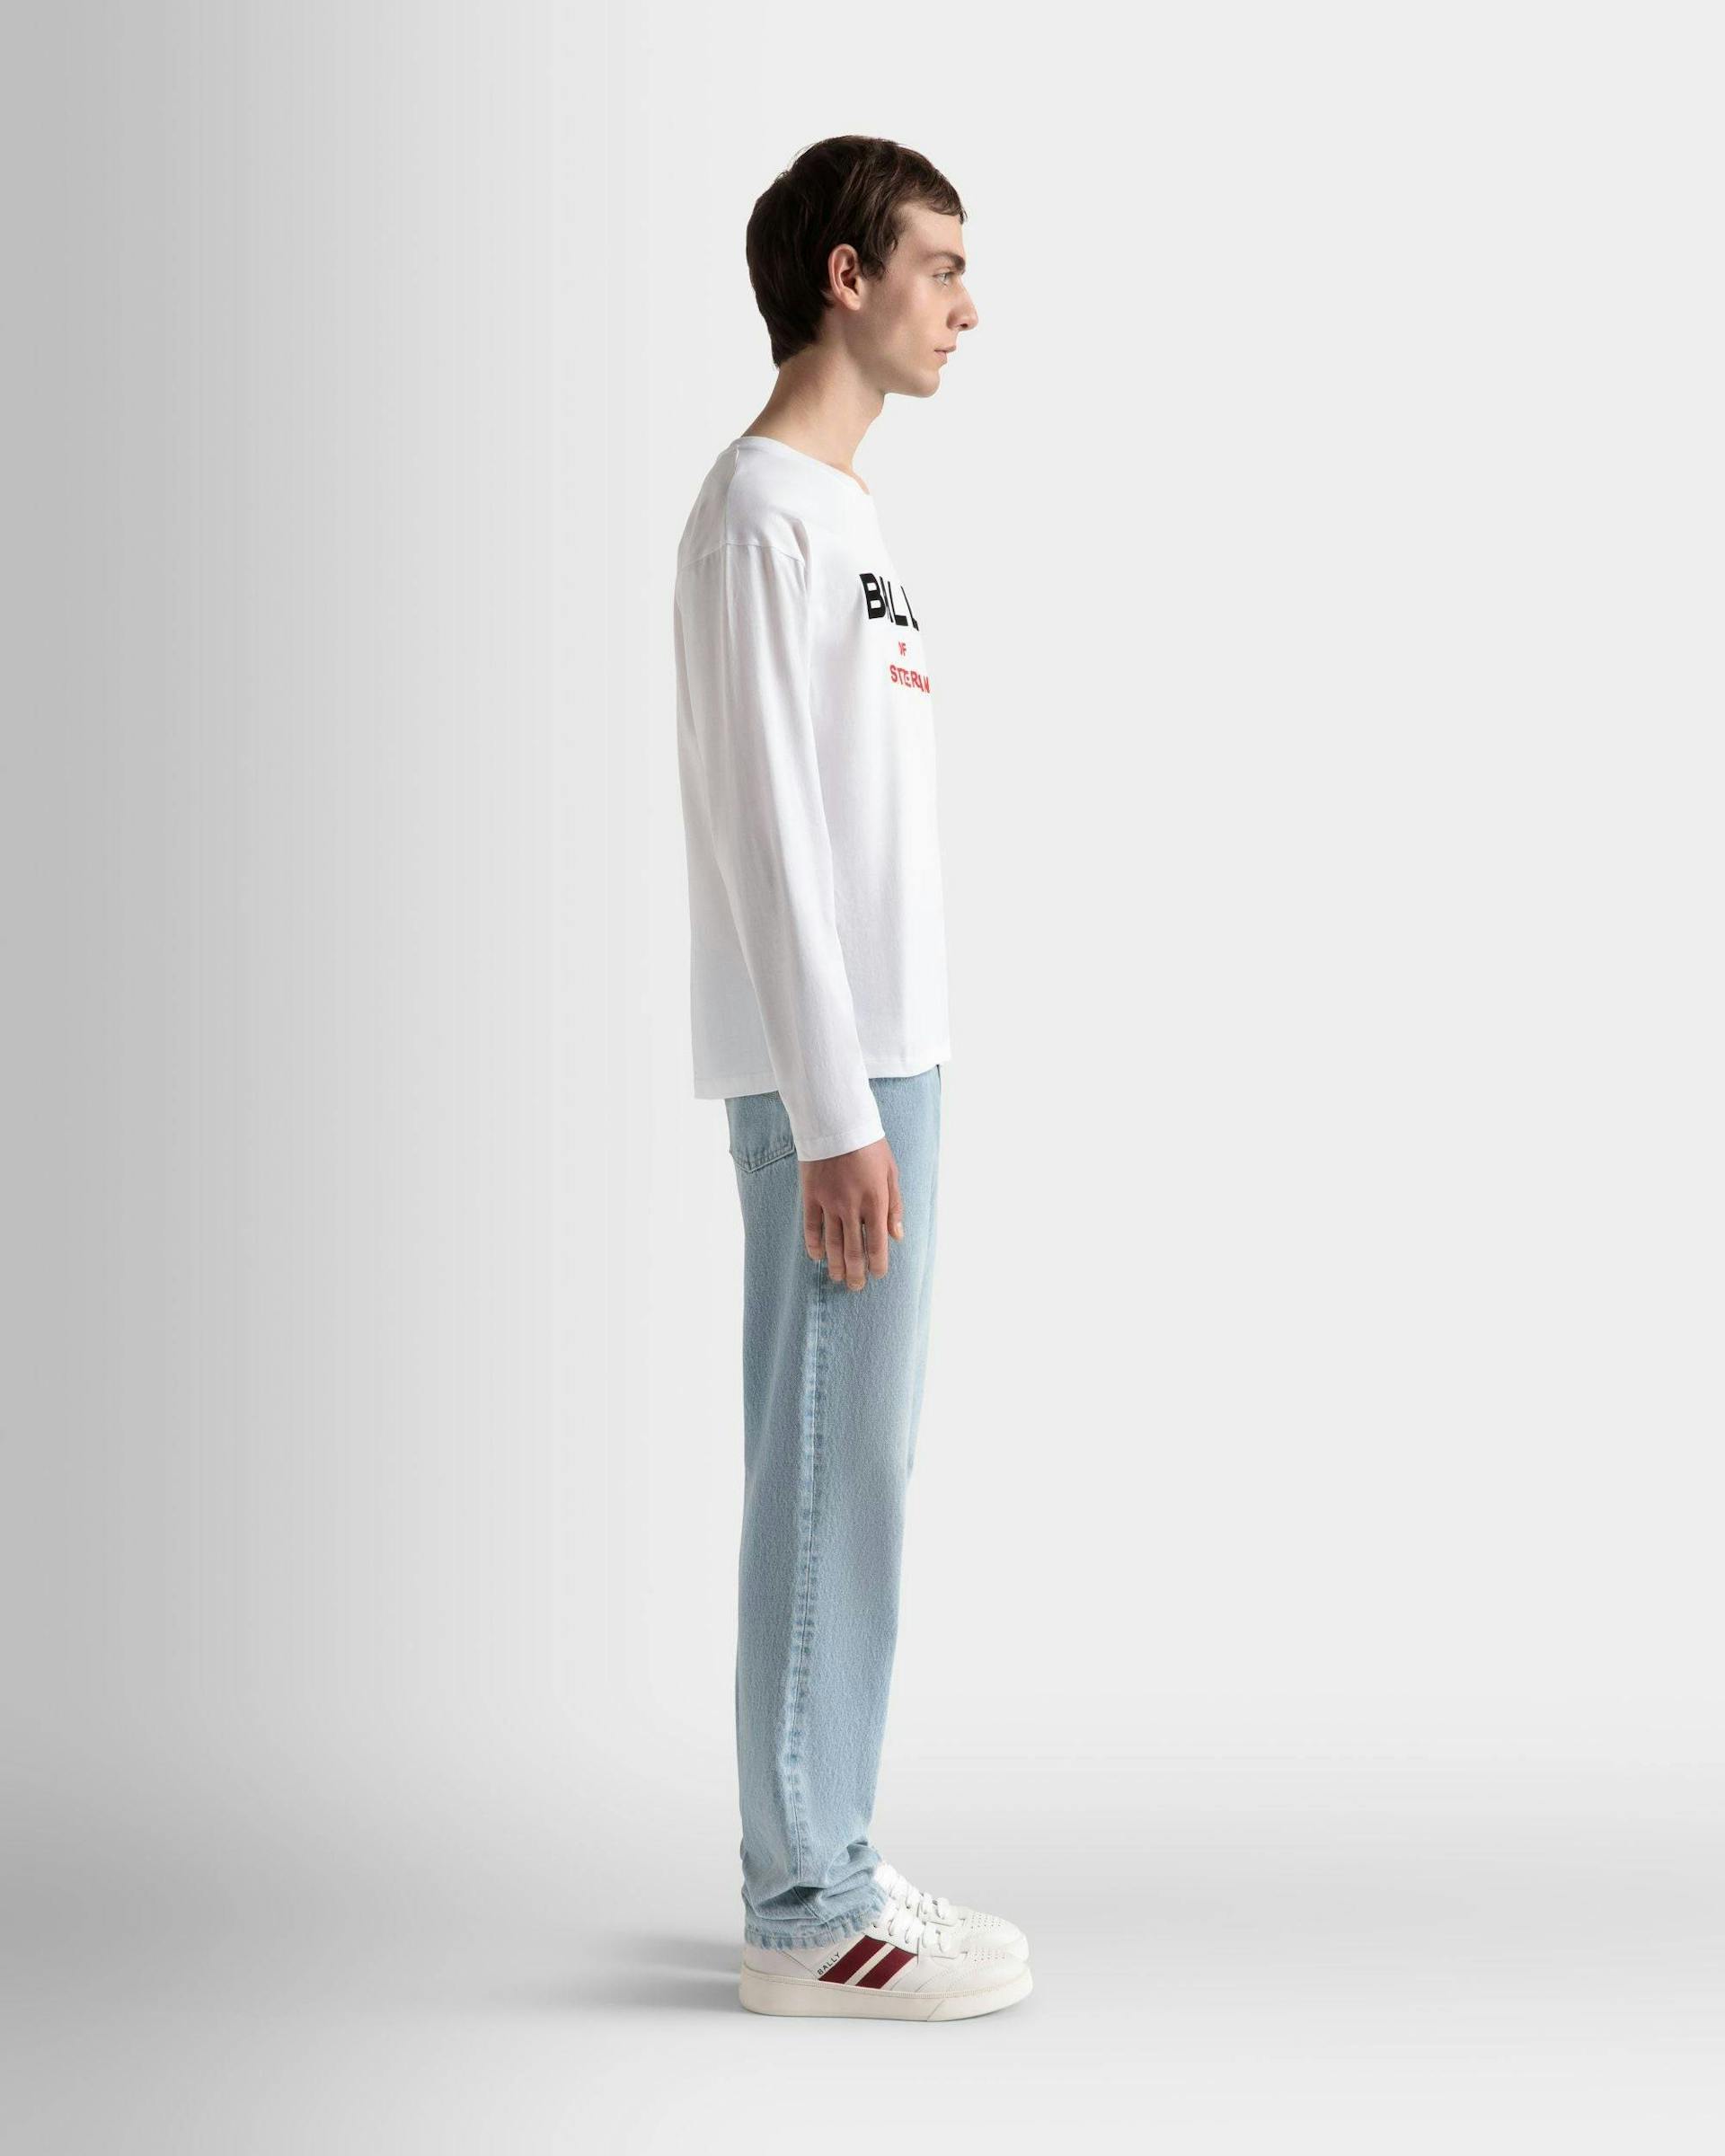 Men's T-Shirt In White Cotton | Bally | On Model 3/4 Front